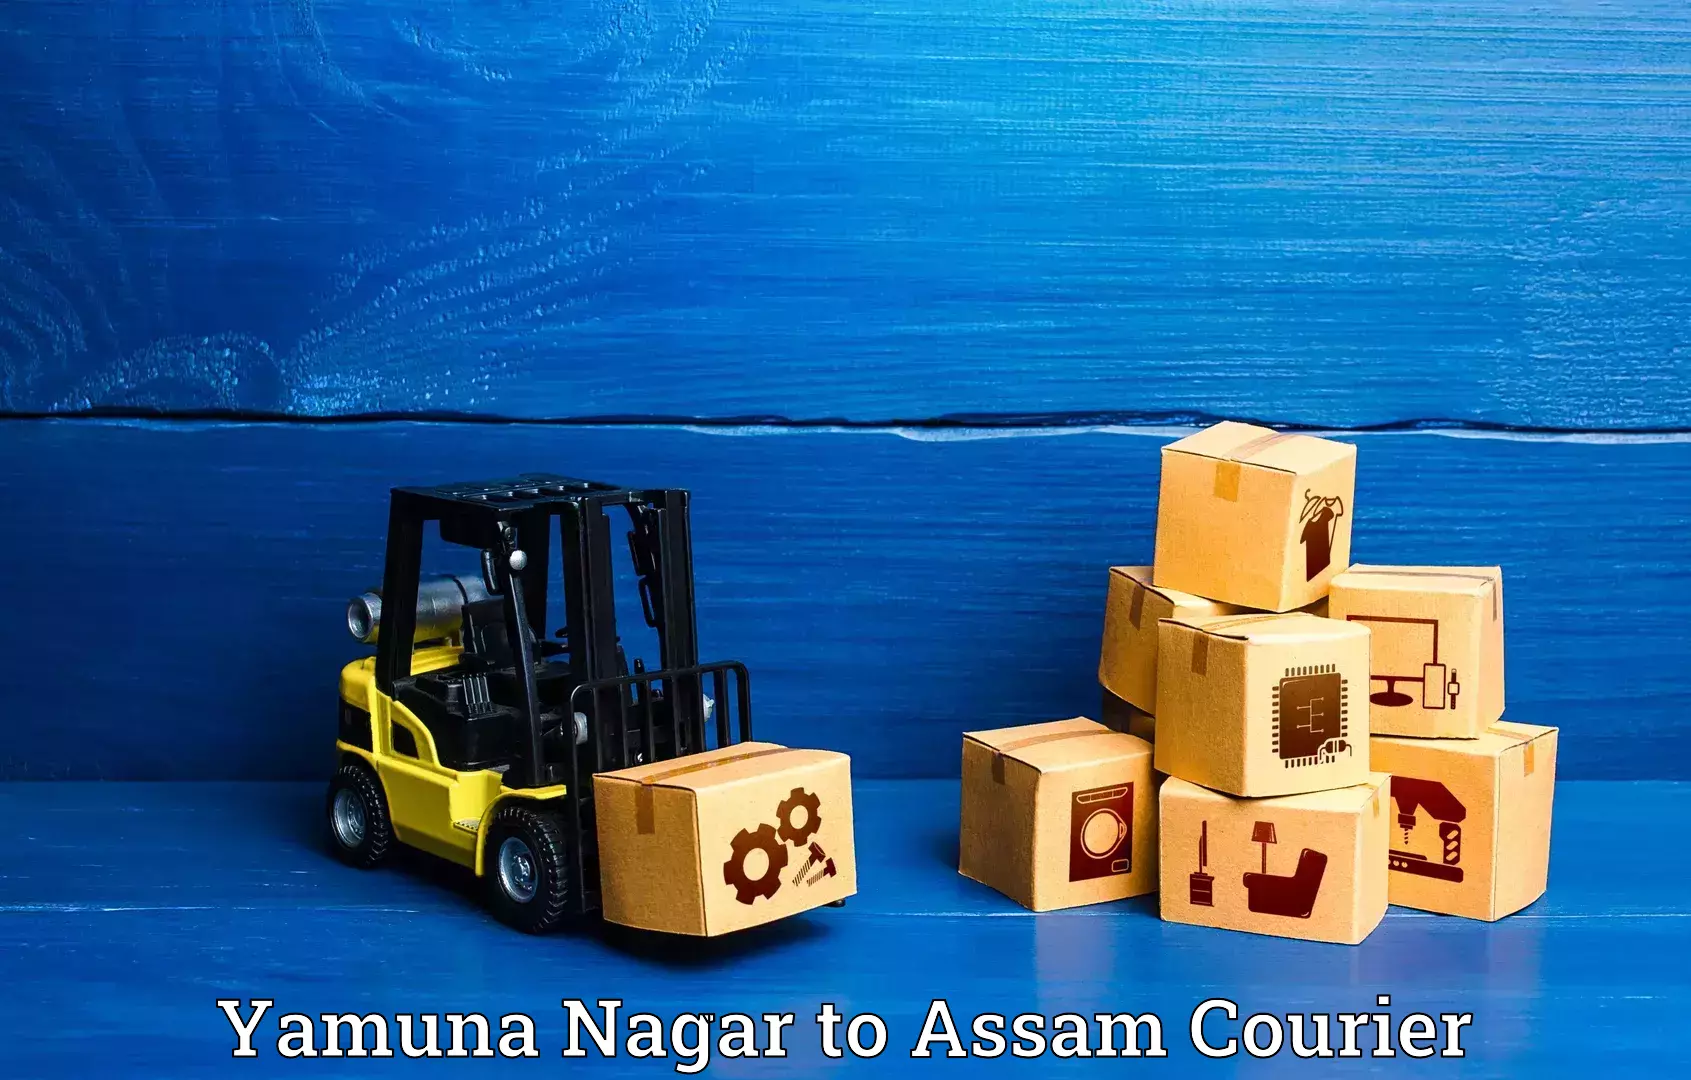 Luggage shipment specialists Yamuna Nagar to Lala Assam